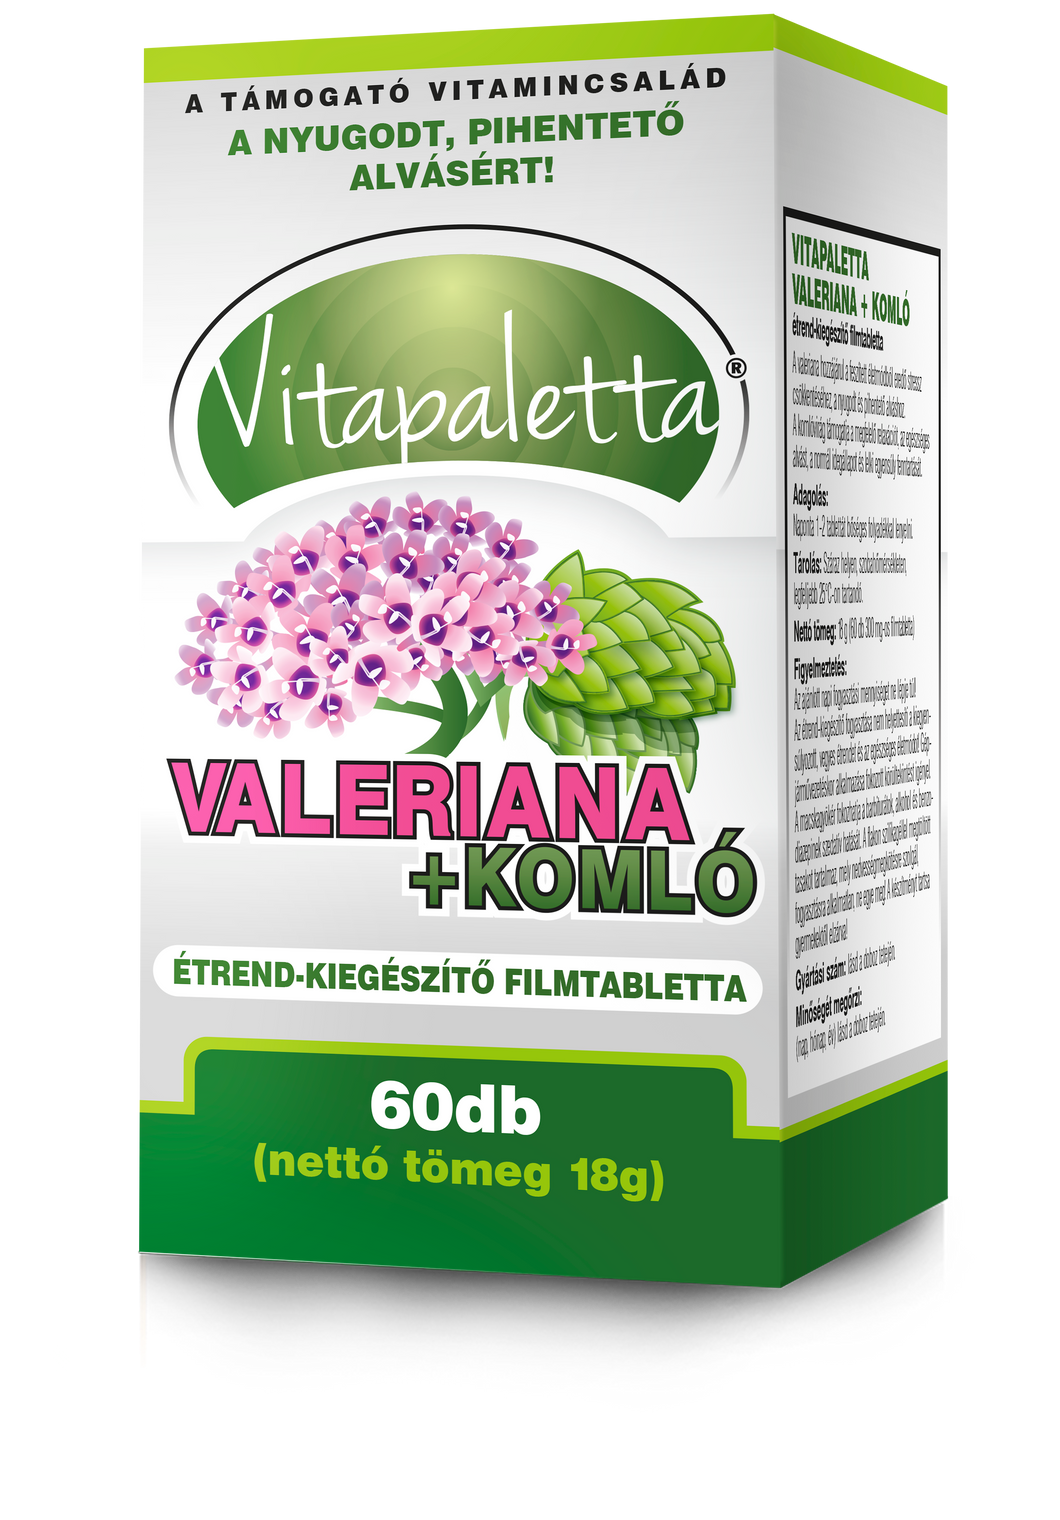 VITAPALETTA VALERIANA + KOMLÓ tabletta 60 db